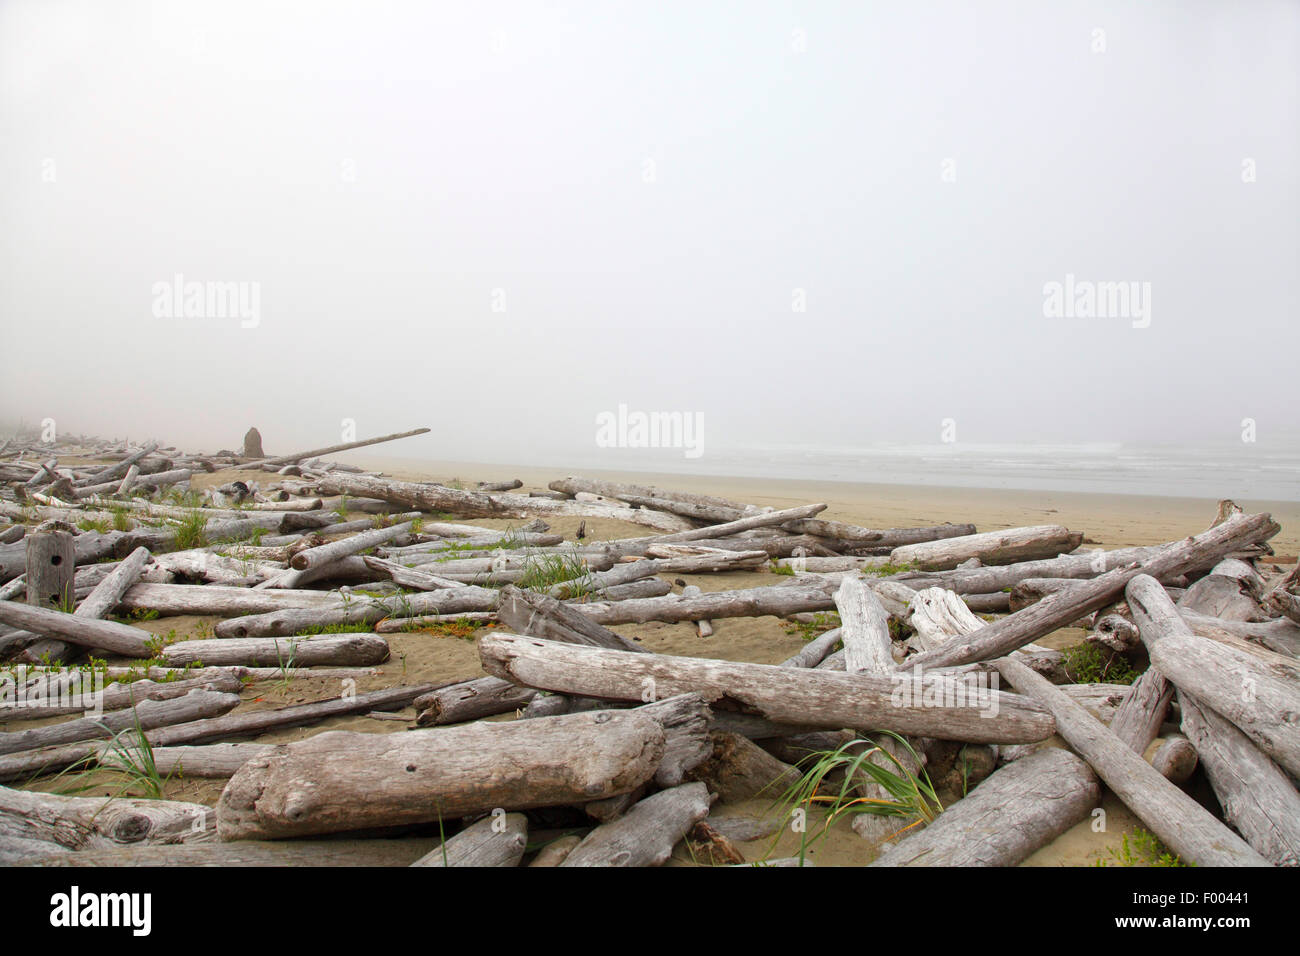 Treibholz am Strand Kämmmaschinen bei Nebel, Tofino, Vancouver Island, Kanada, Pacific Rim Nationalpark Stockfoto